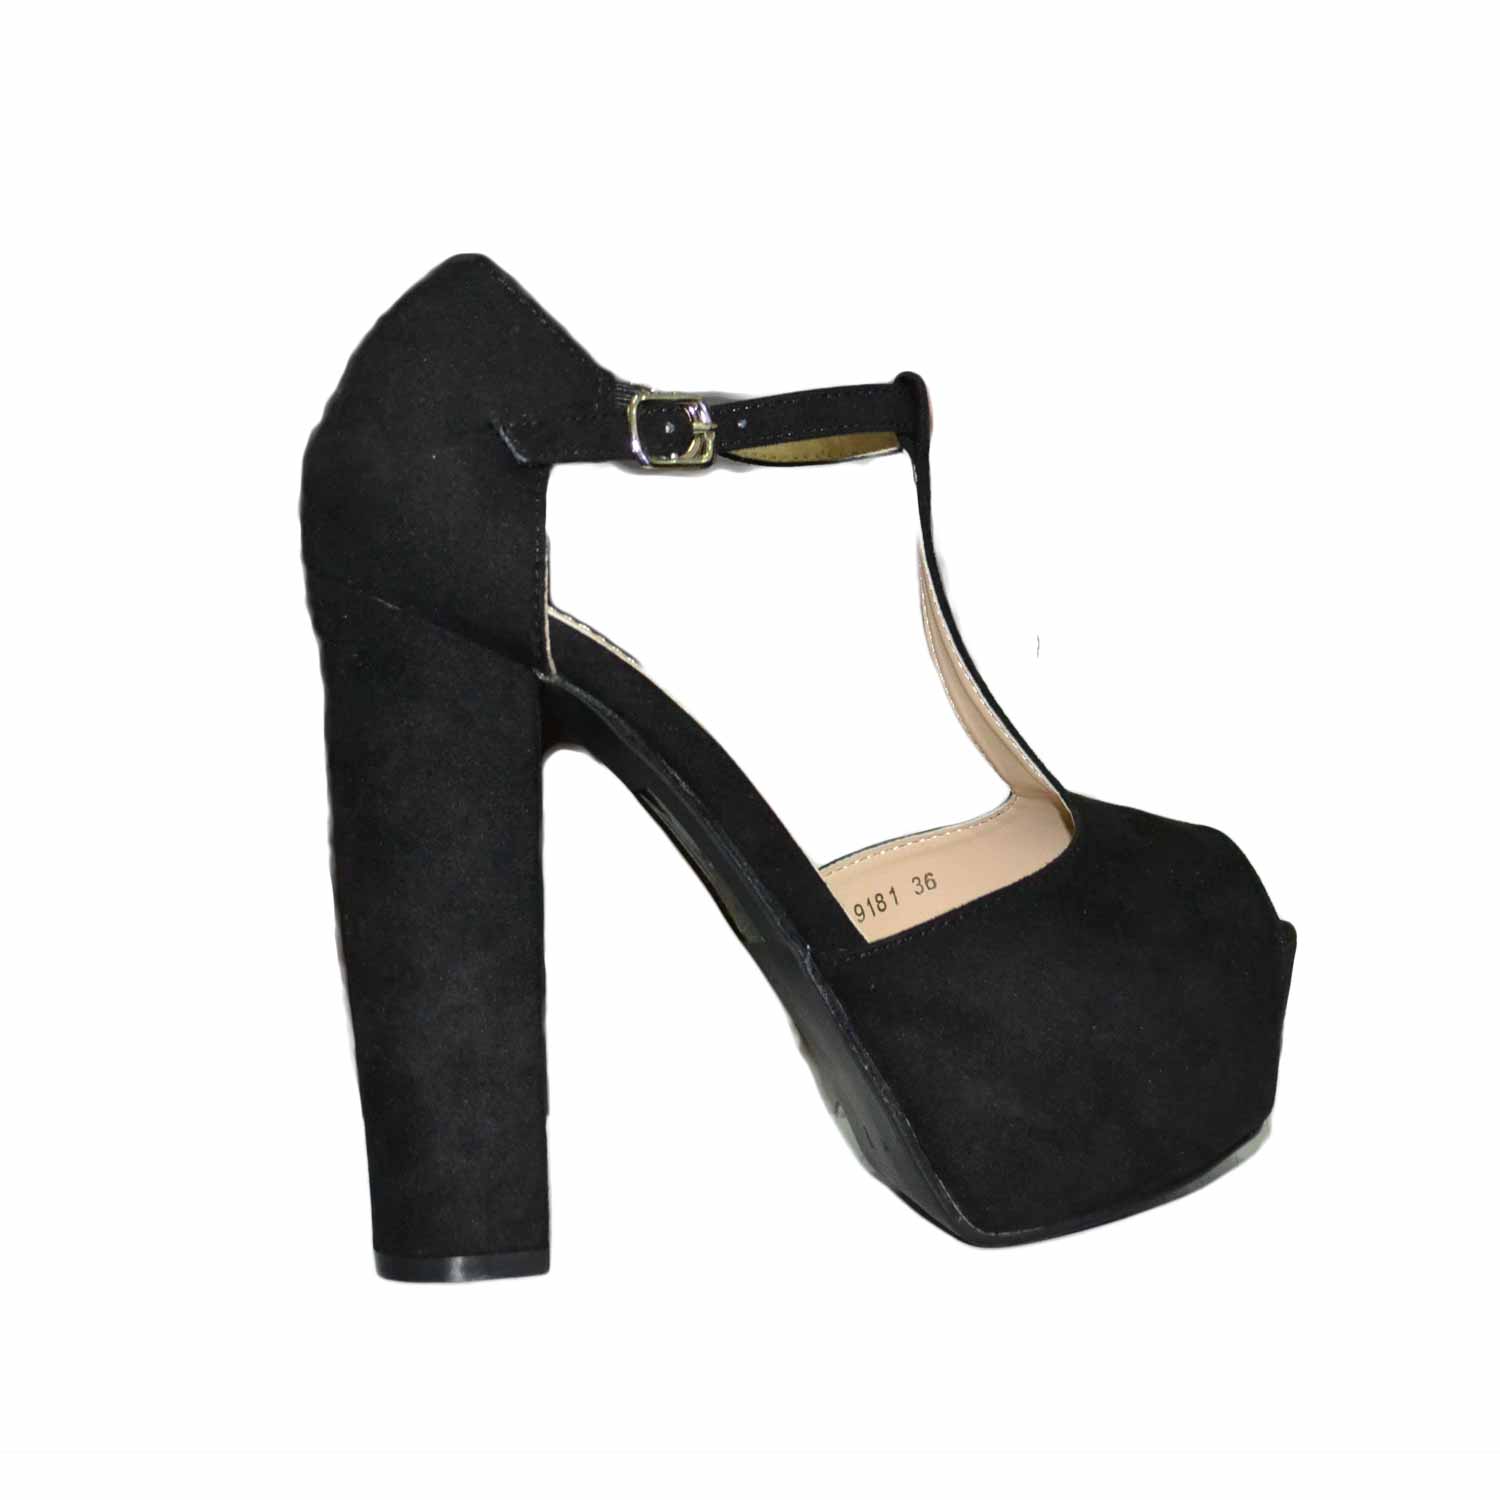 Scarpe donna tacco largo comodo camoscio nero con cinturino donna sandali  tacco malu shoes | MaluShoes